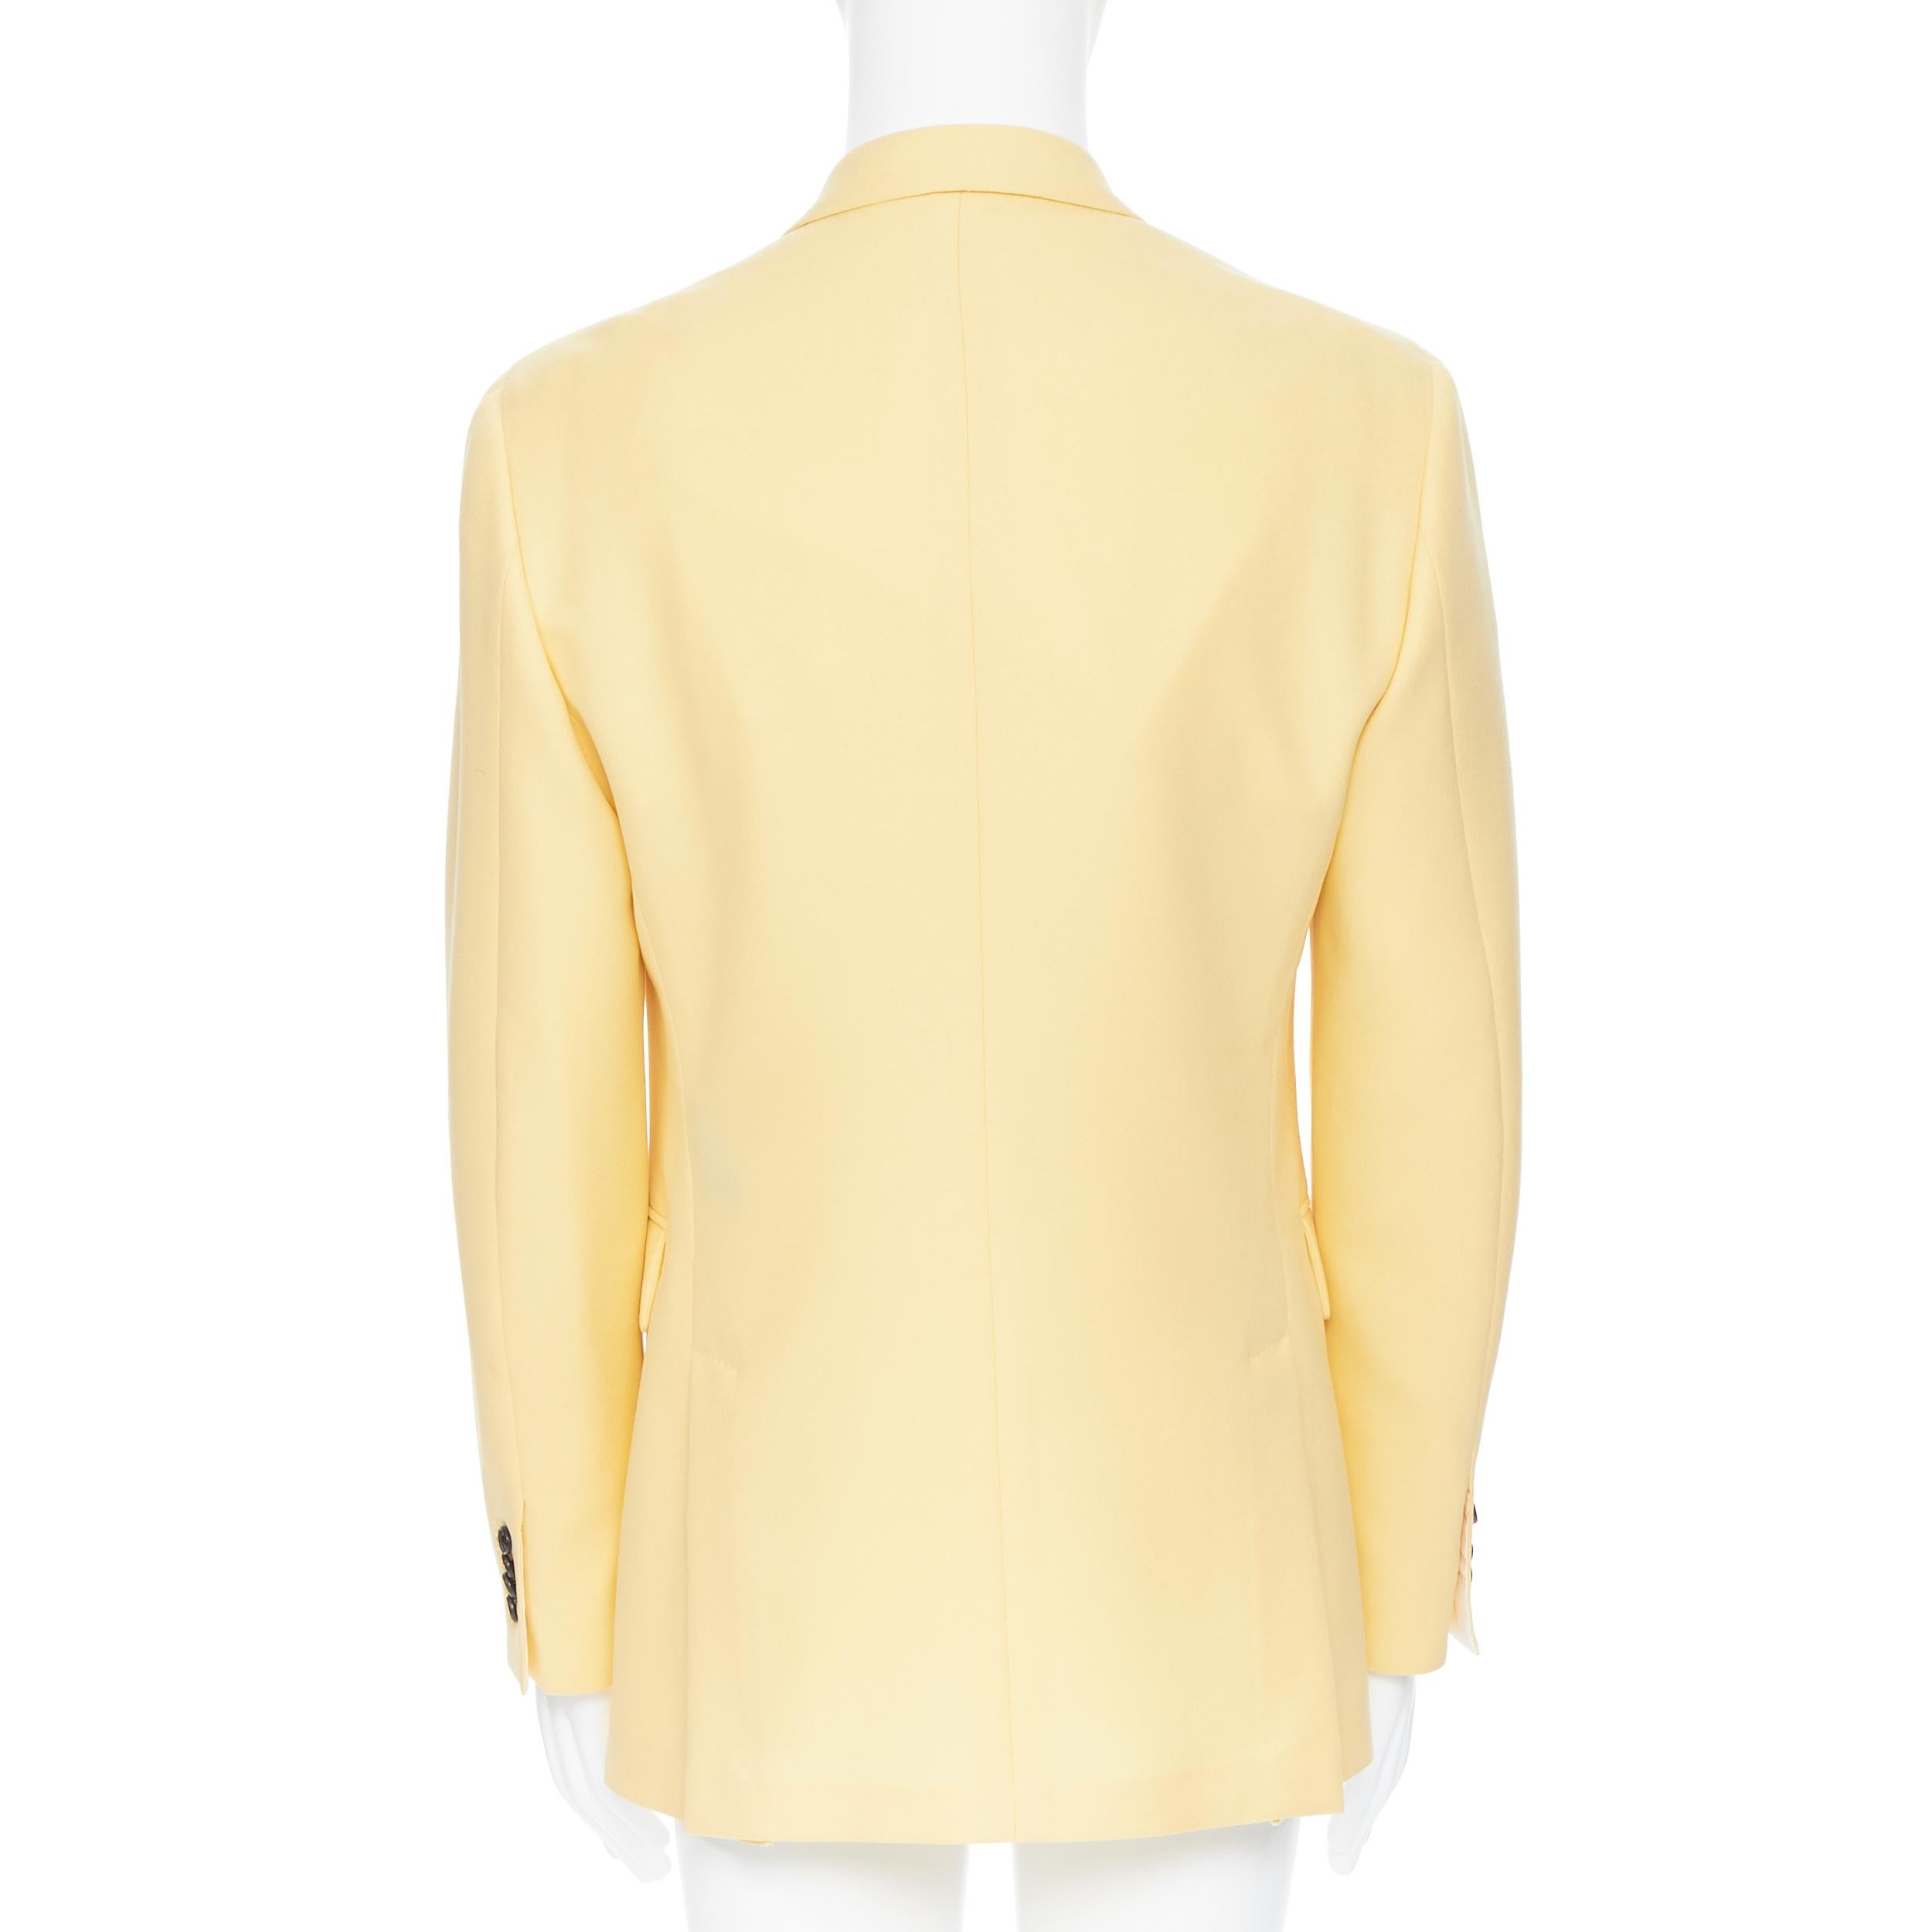 Yellow new CALVIN KLEIN 209W39NYC pastel yellow double breasted blazer jacket US40